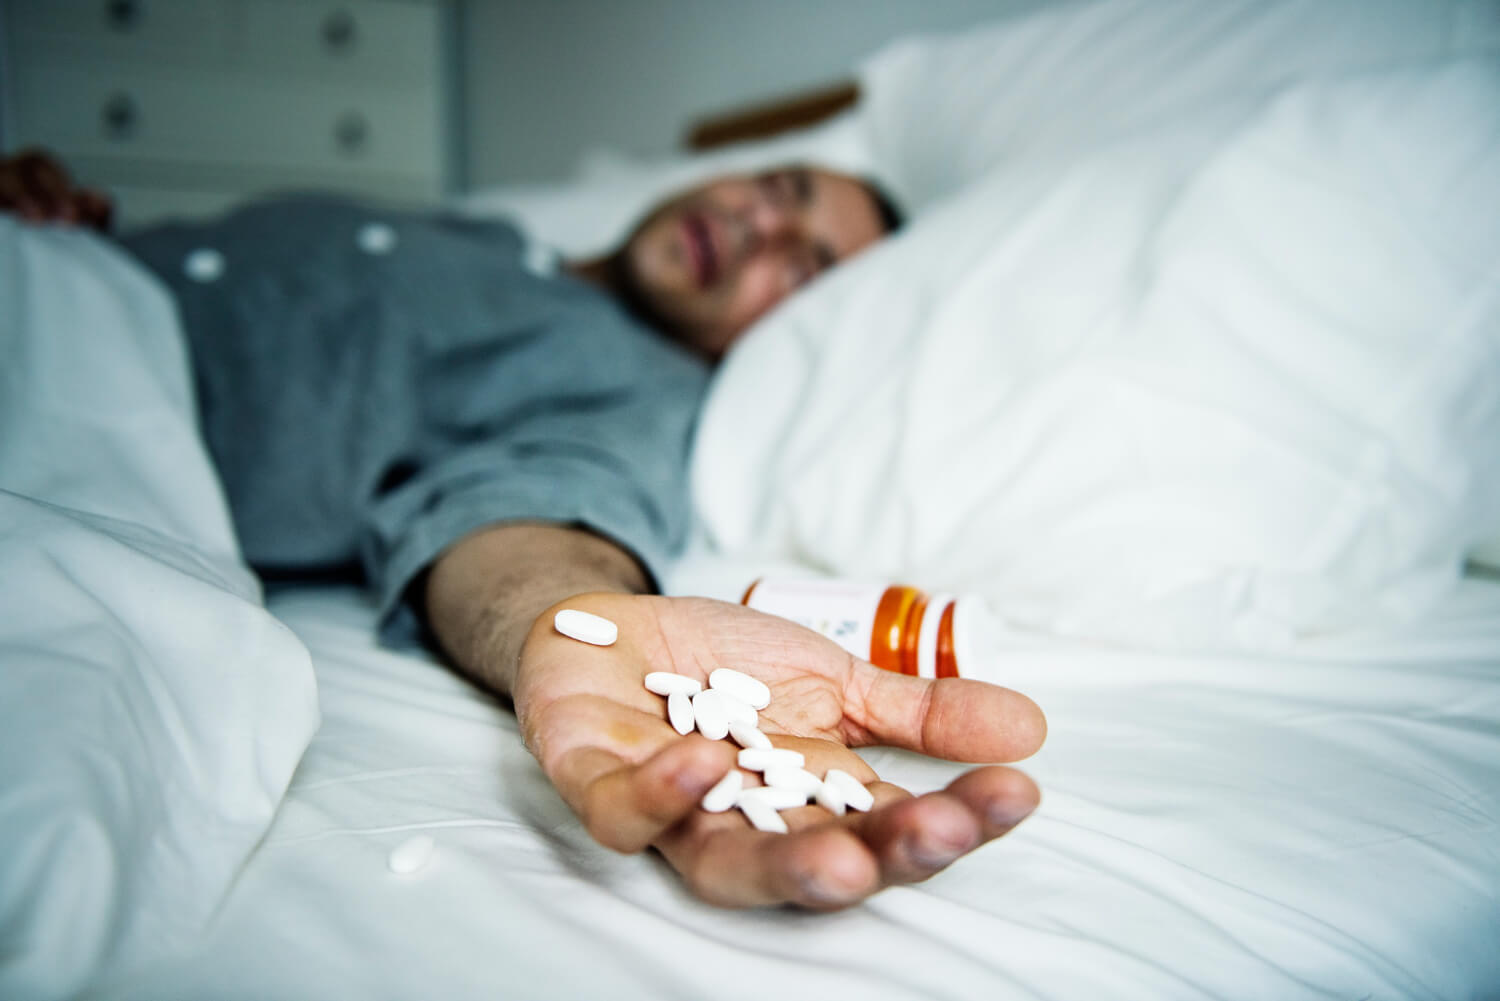 amphetamine addiction recovery for California residents